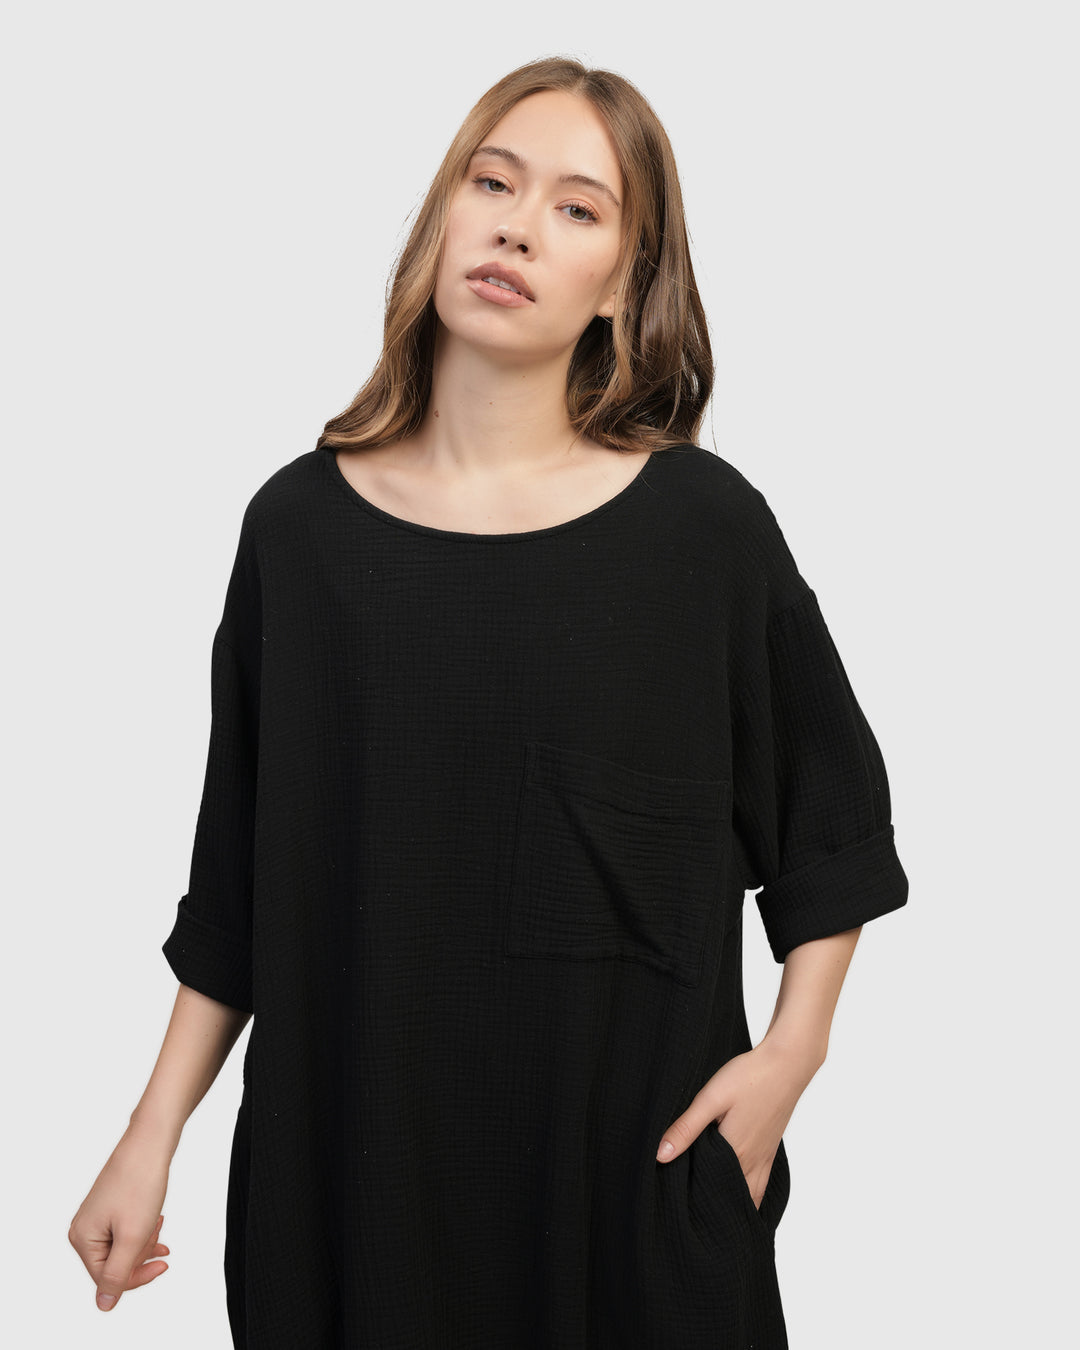 Oasis T-Shirt Dress, Black